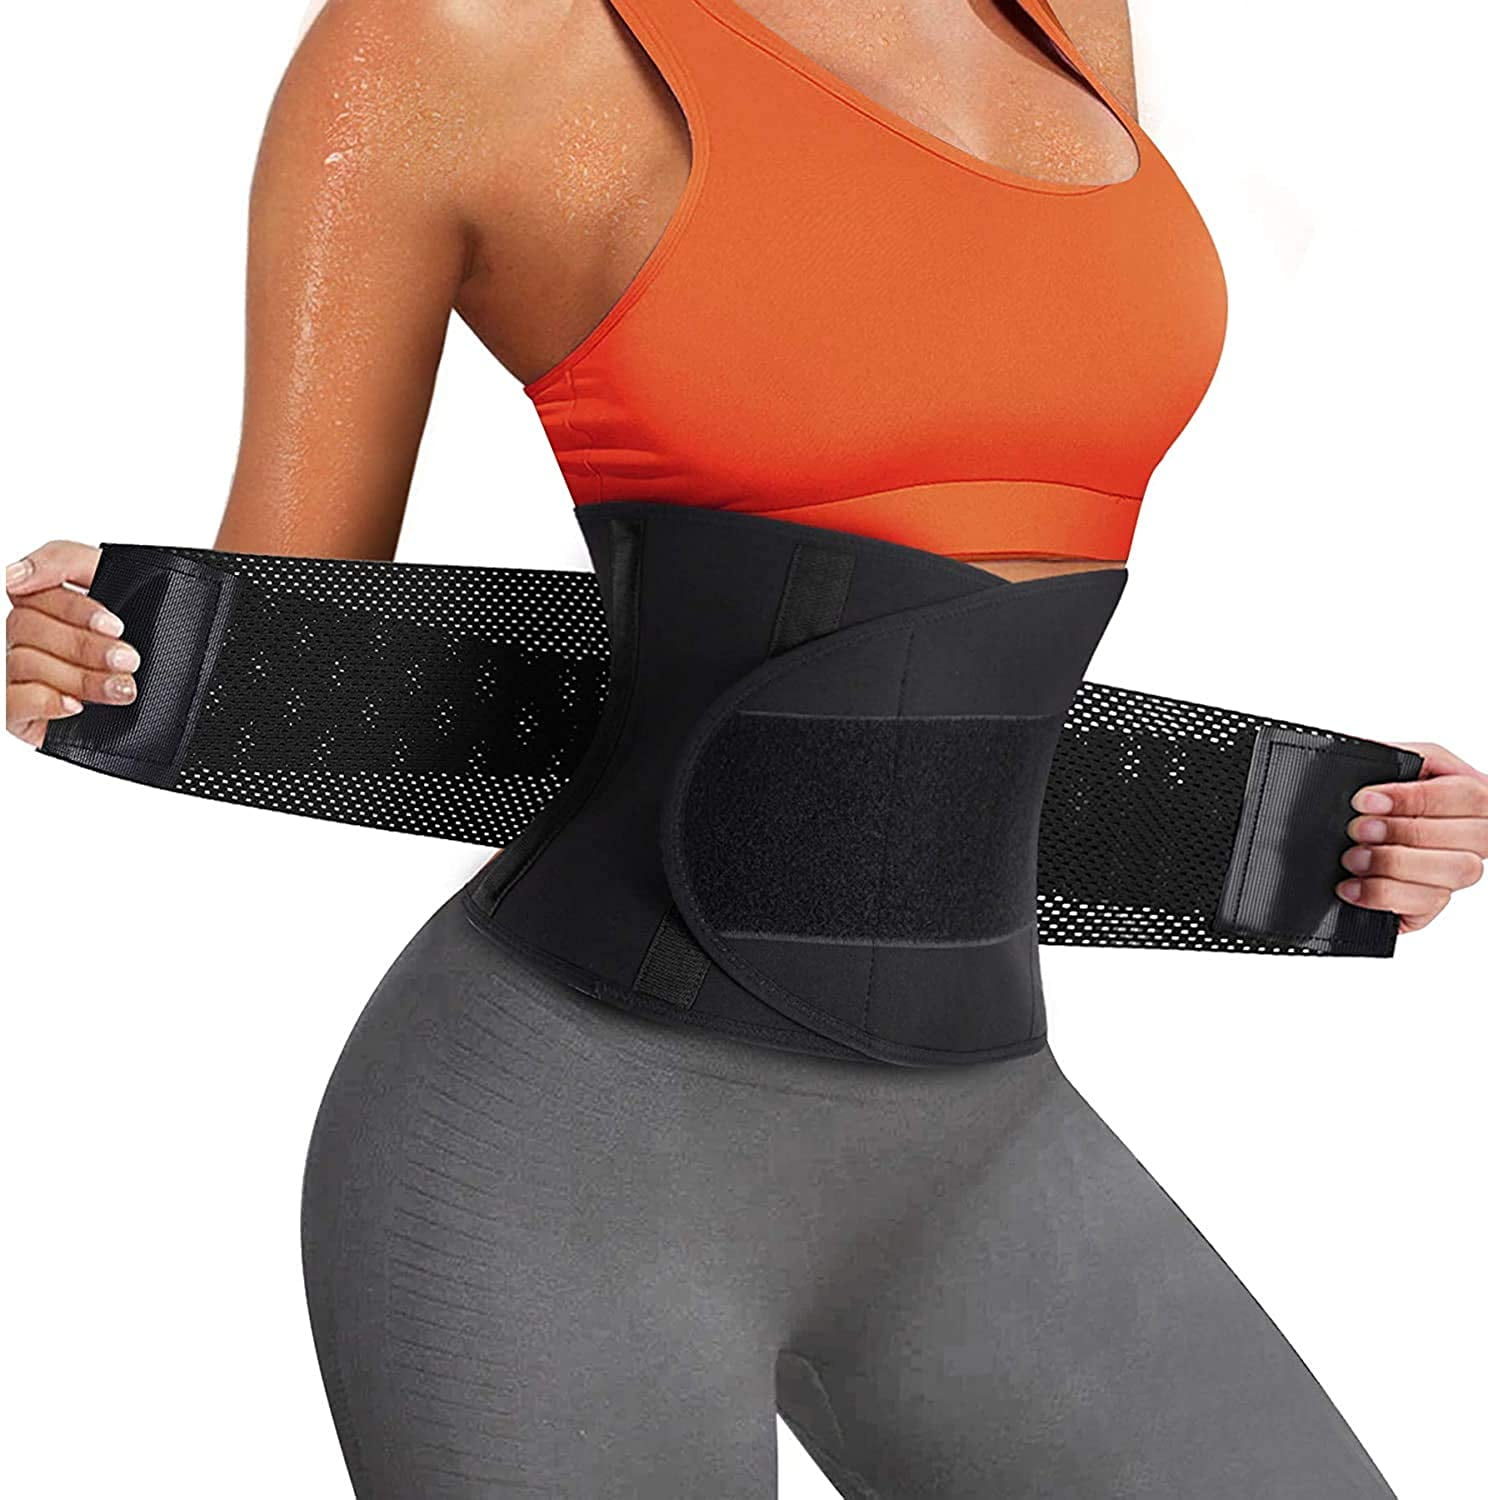 Sweat Sauna Waist Trainer Cincher Women Slimming Neoprene Body Shaper Belt Fajas 